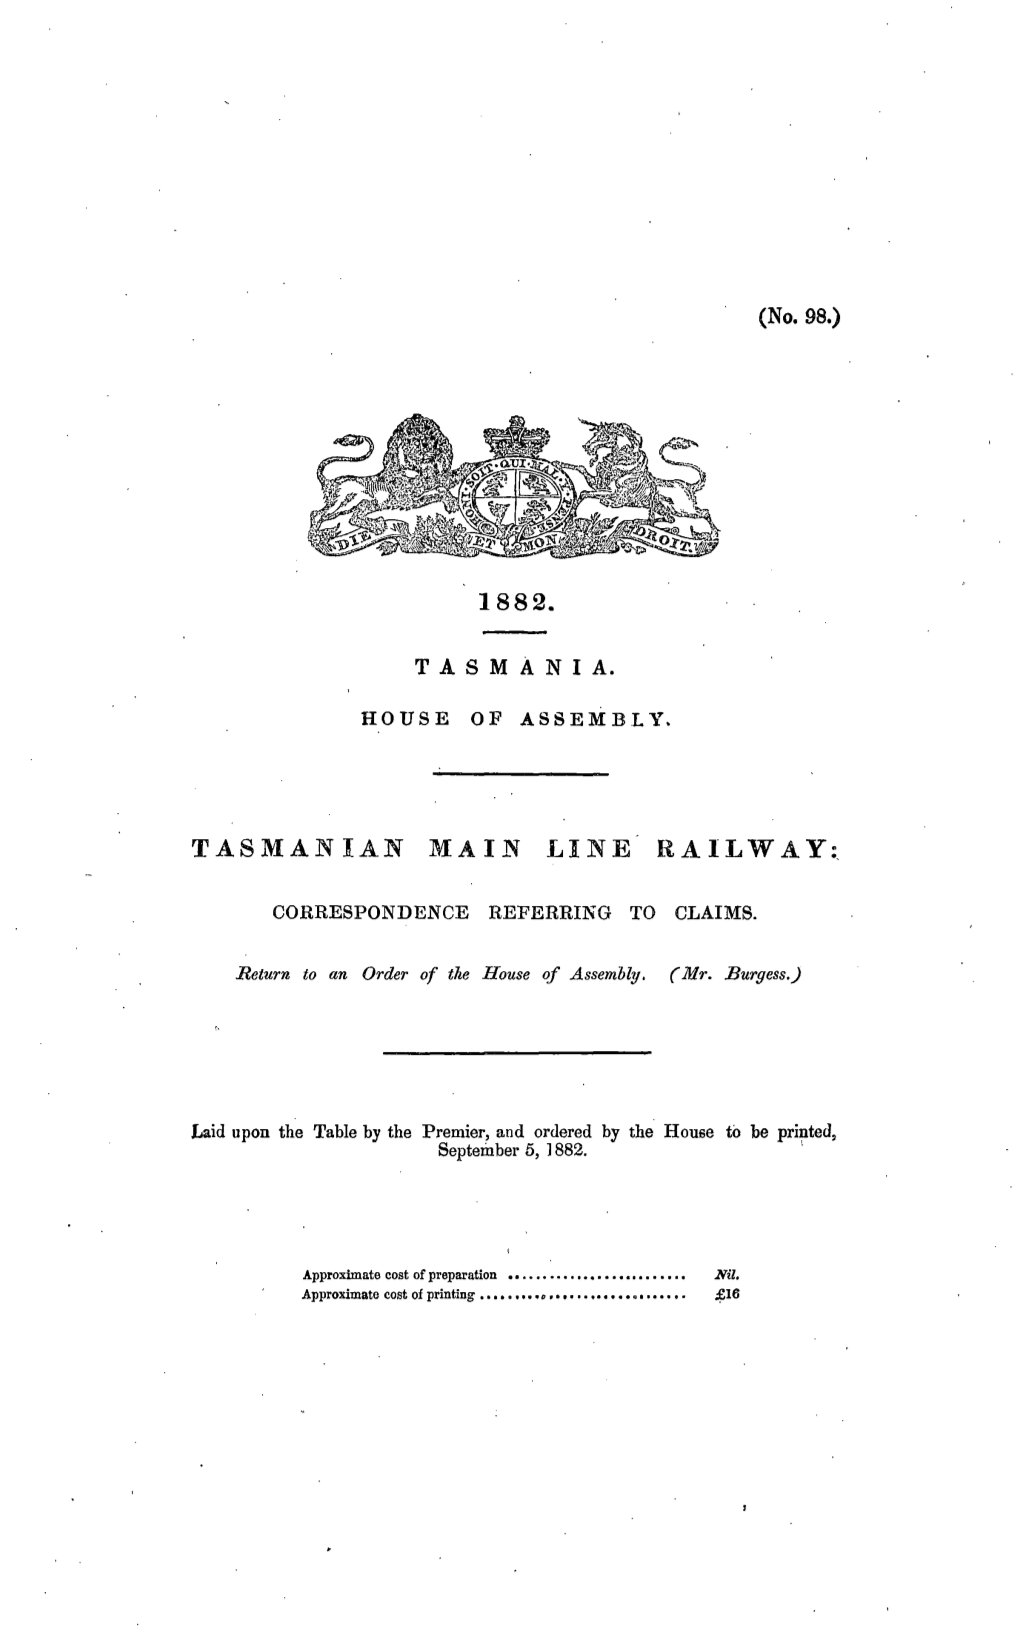 Tasmanian Main Line Railway